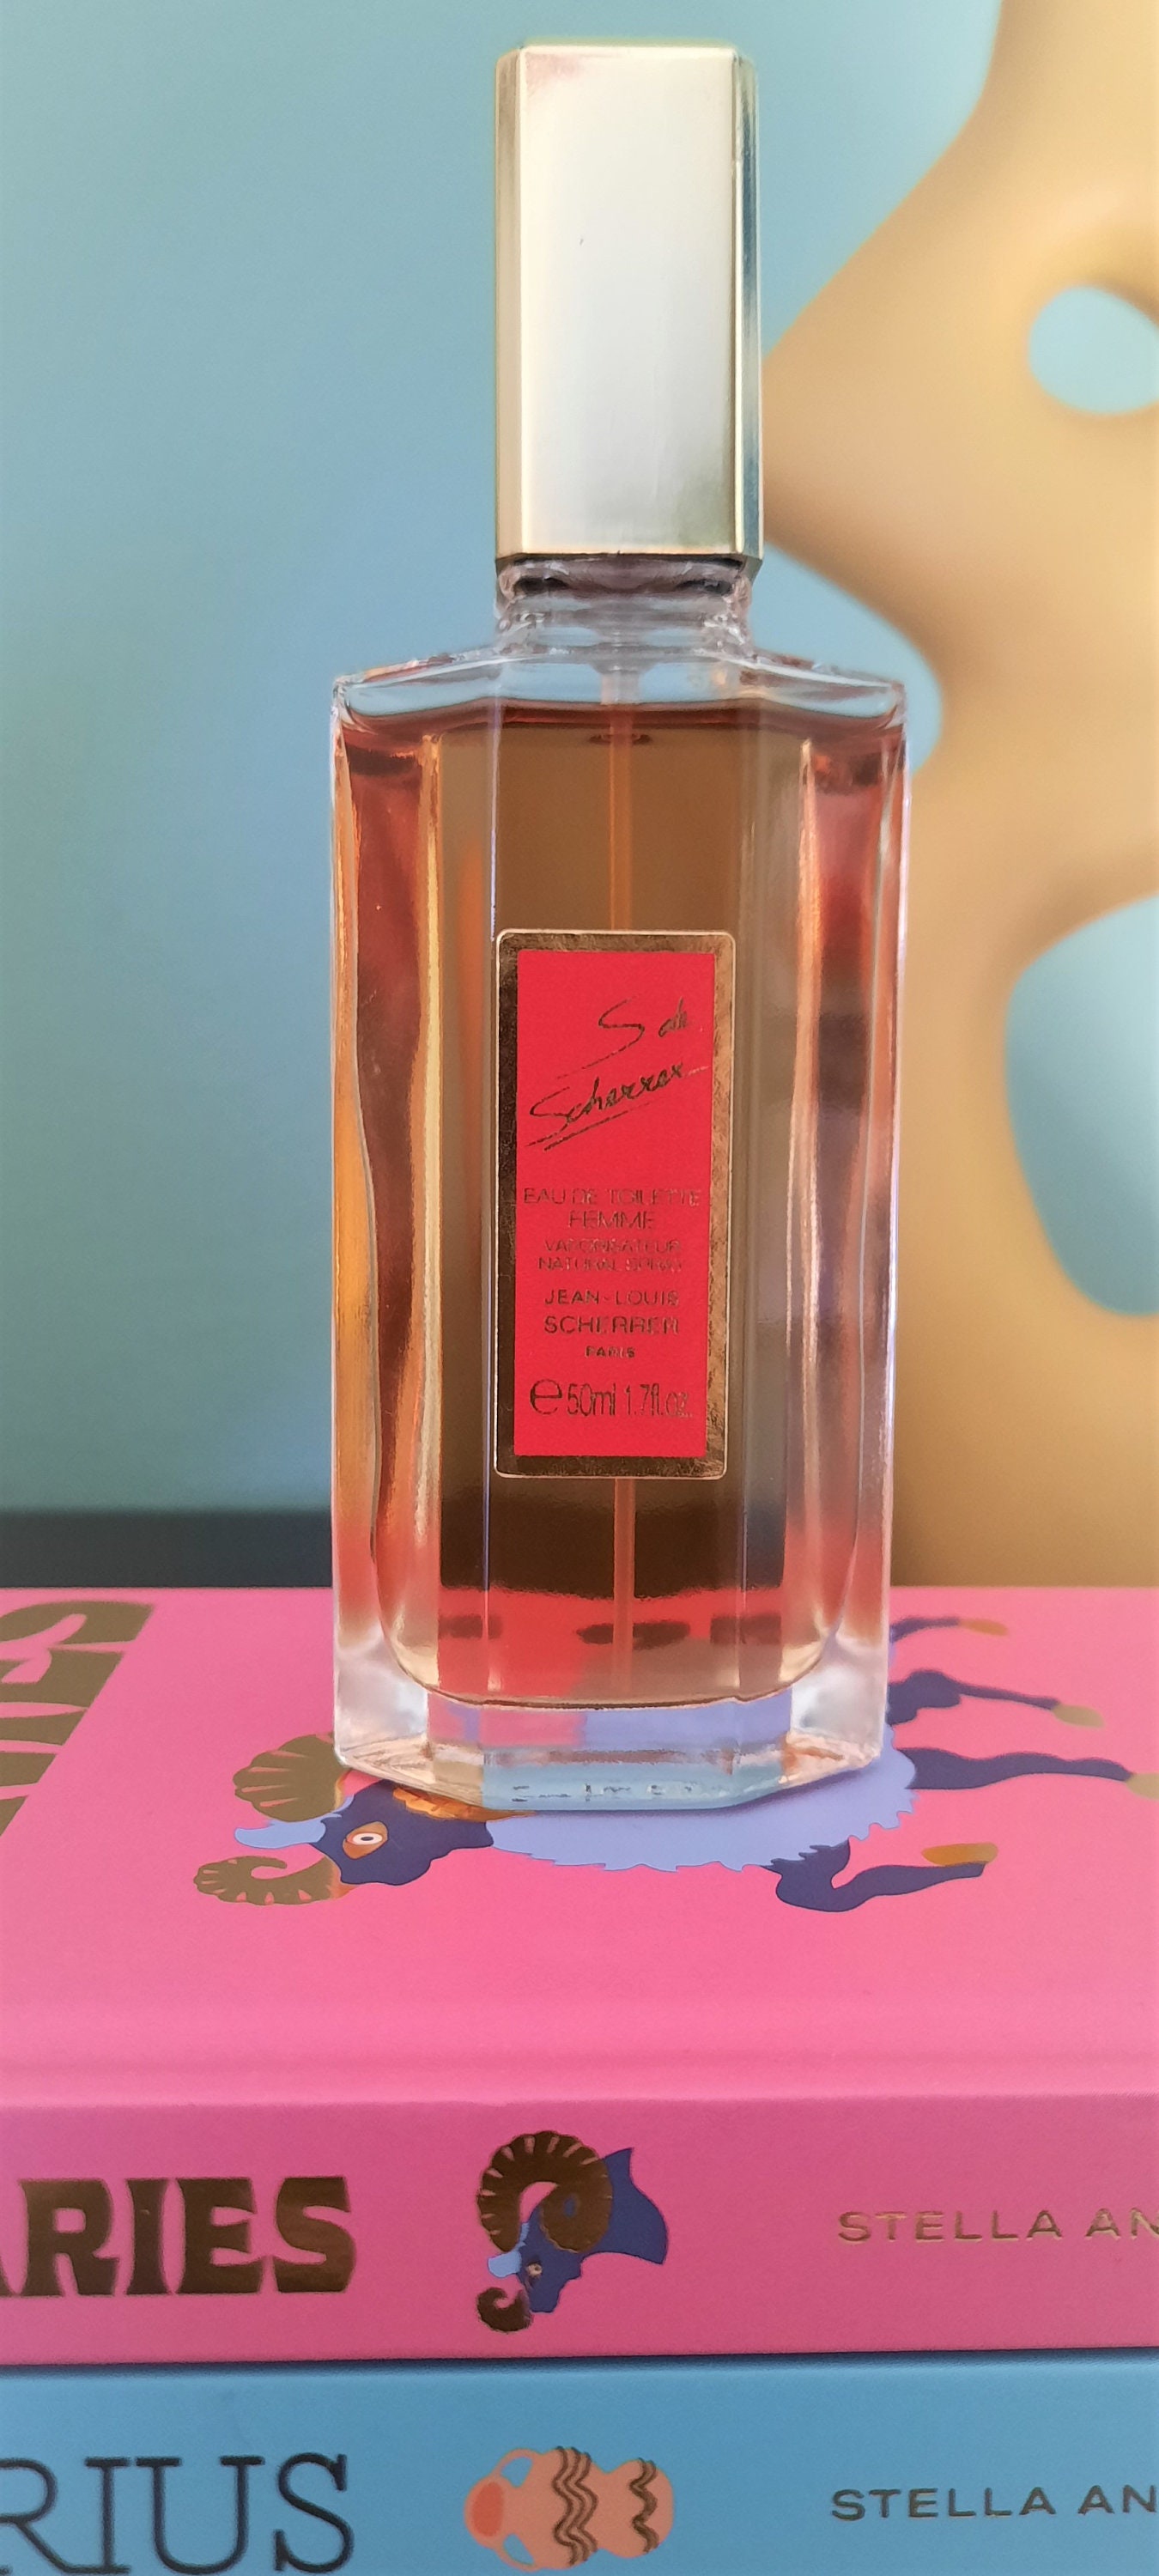 S de Scherrer Jean-Louis Scherrer perfume - a fragrance for women 2006